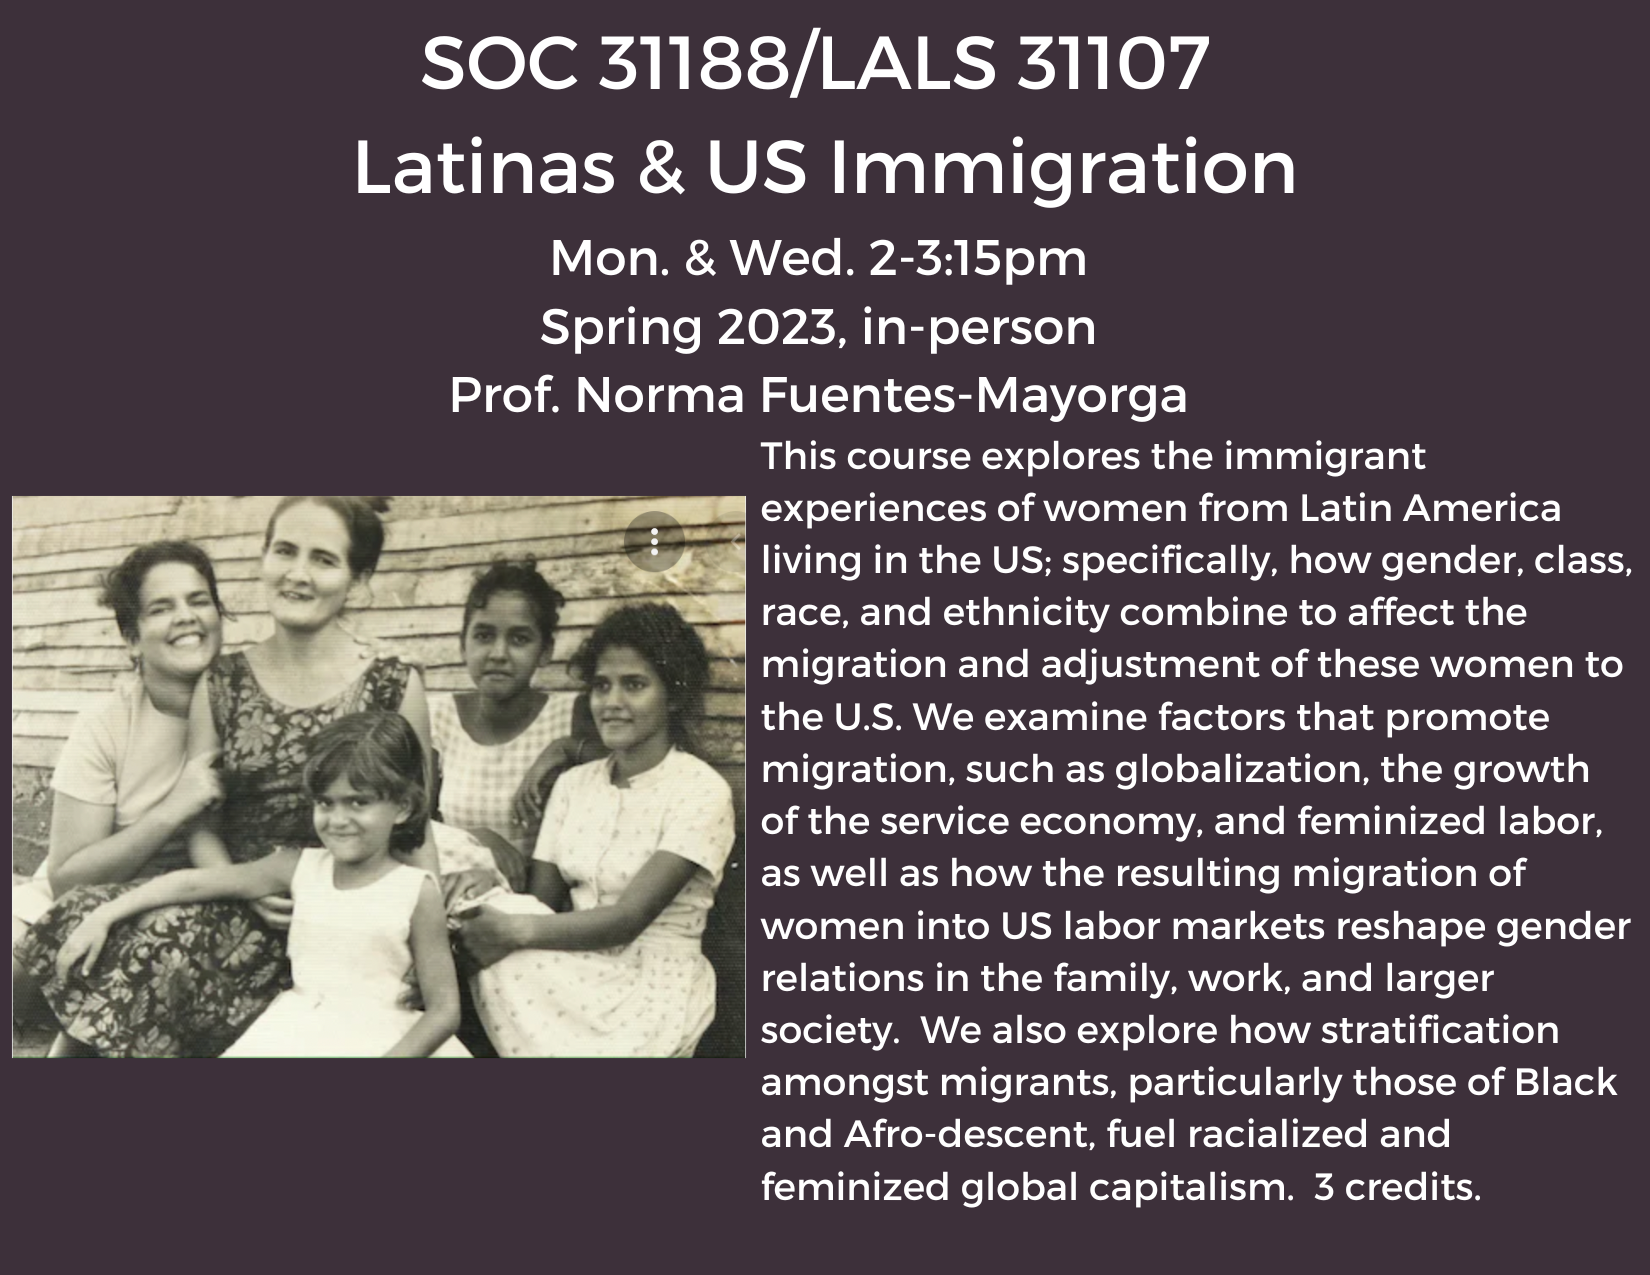 ColinPowellSchool CCNY Sociology SOC31188 LatinasUSImmigration Spring 2023 Course